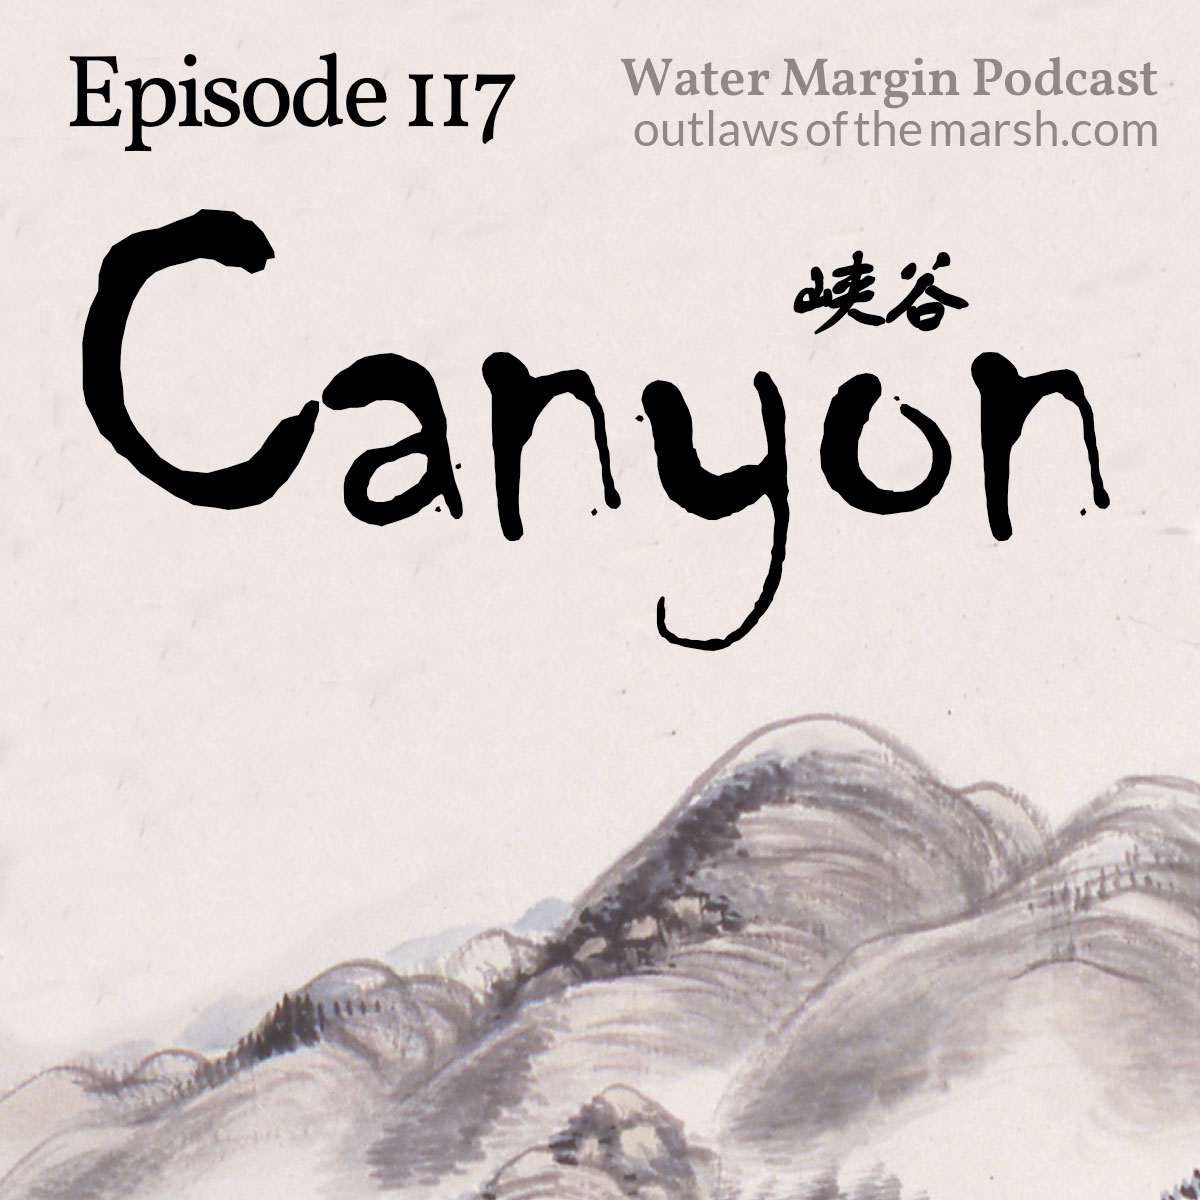 Water Margin Podcast: Episode 117